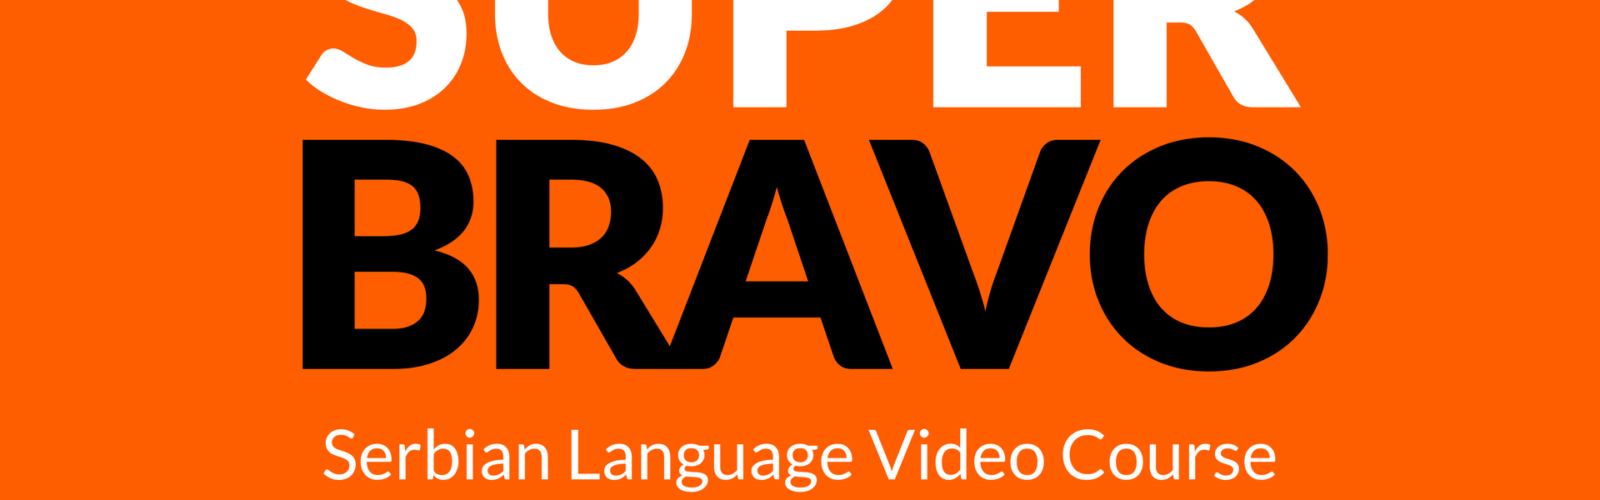 free serbian language video course